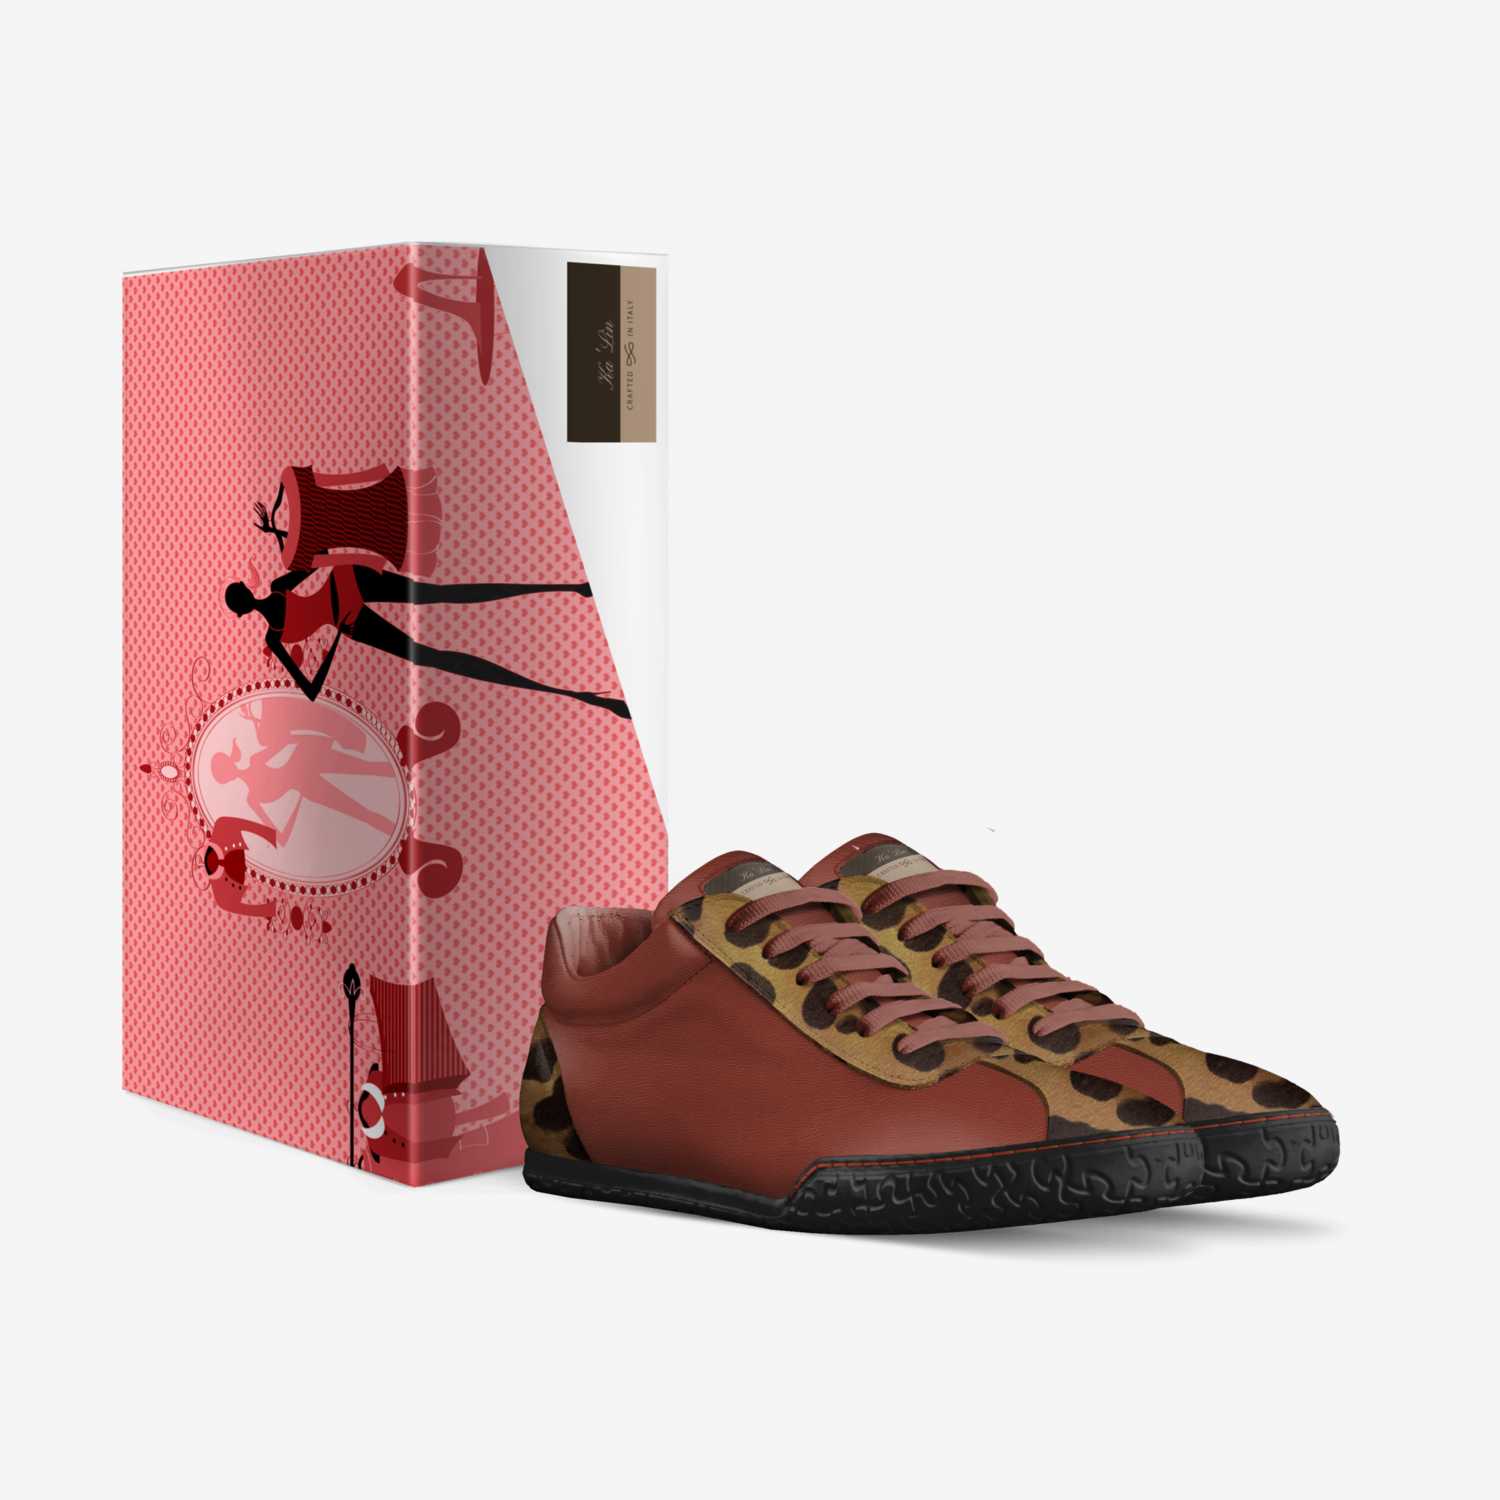 Ka'Lin custom made in Italy shoes by Yena Hogan | Box view